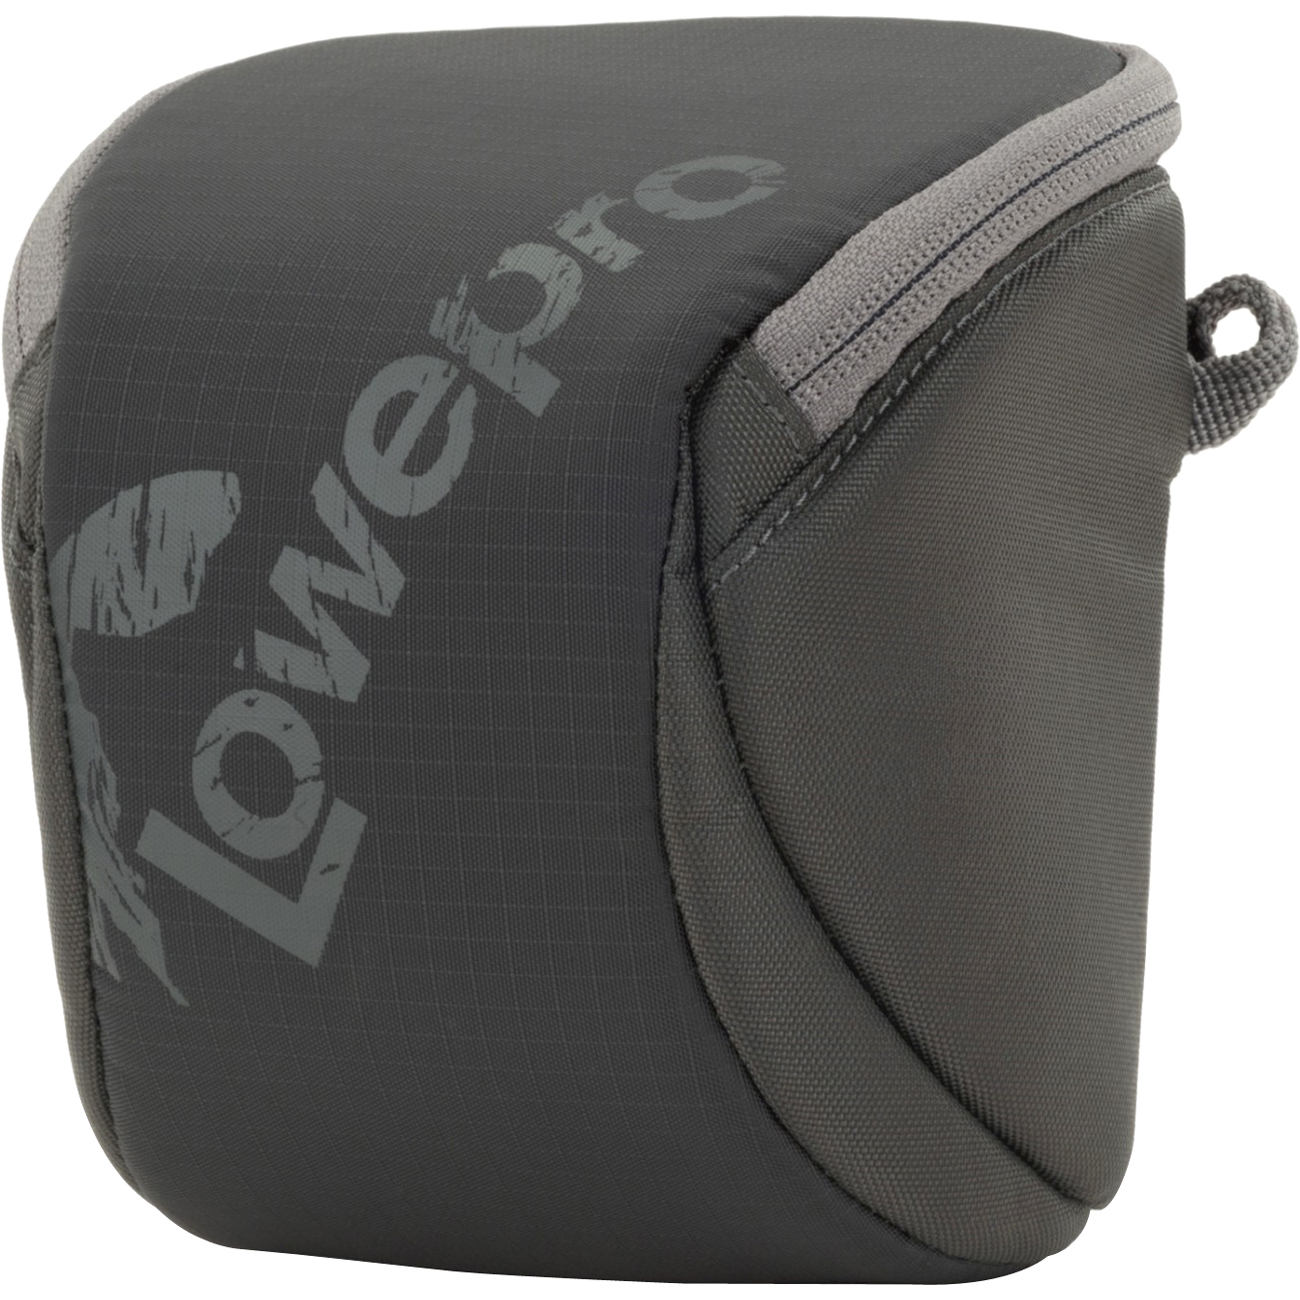 Lowepro Dashpoint 30 Slate Grey camera case